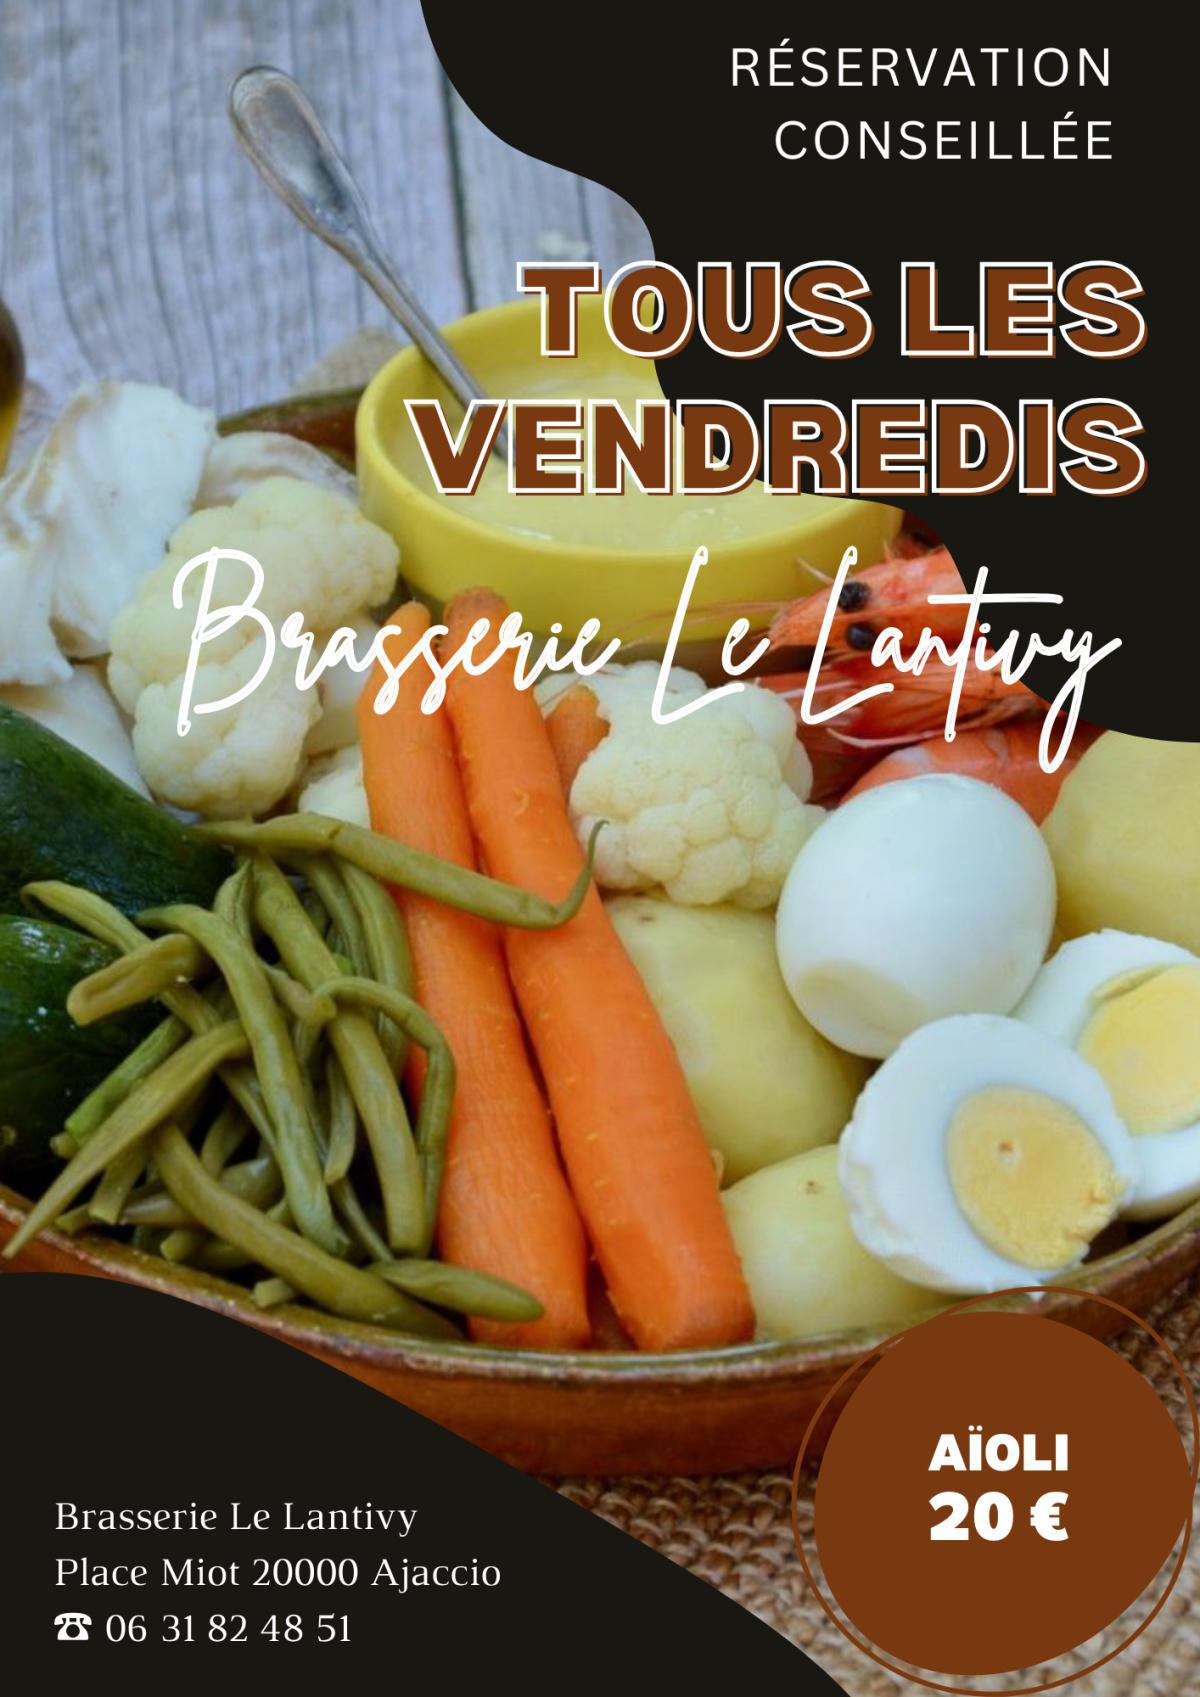 Brasserie Le Lantivy